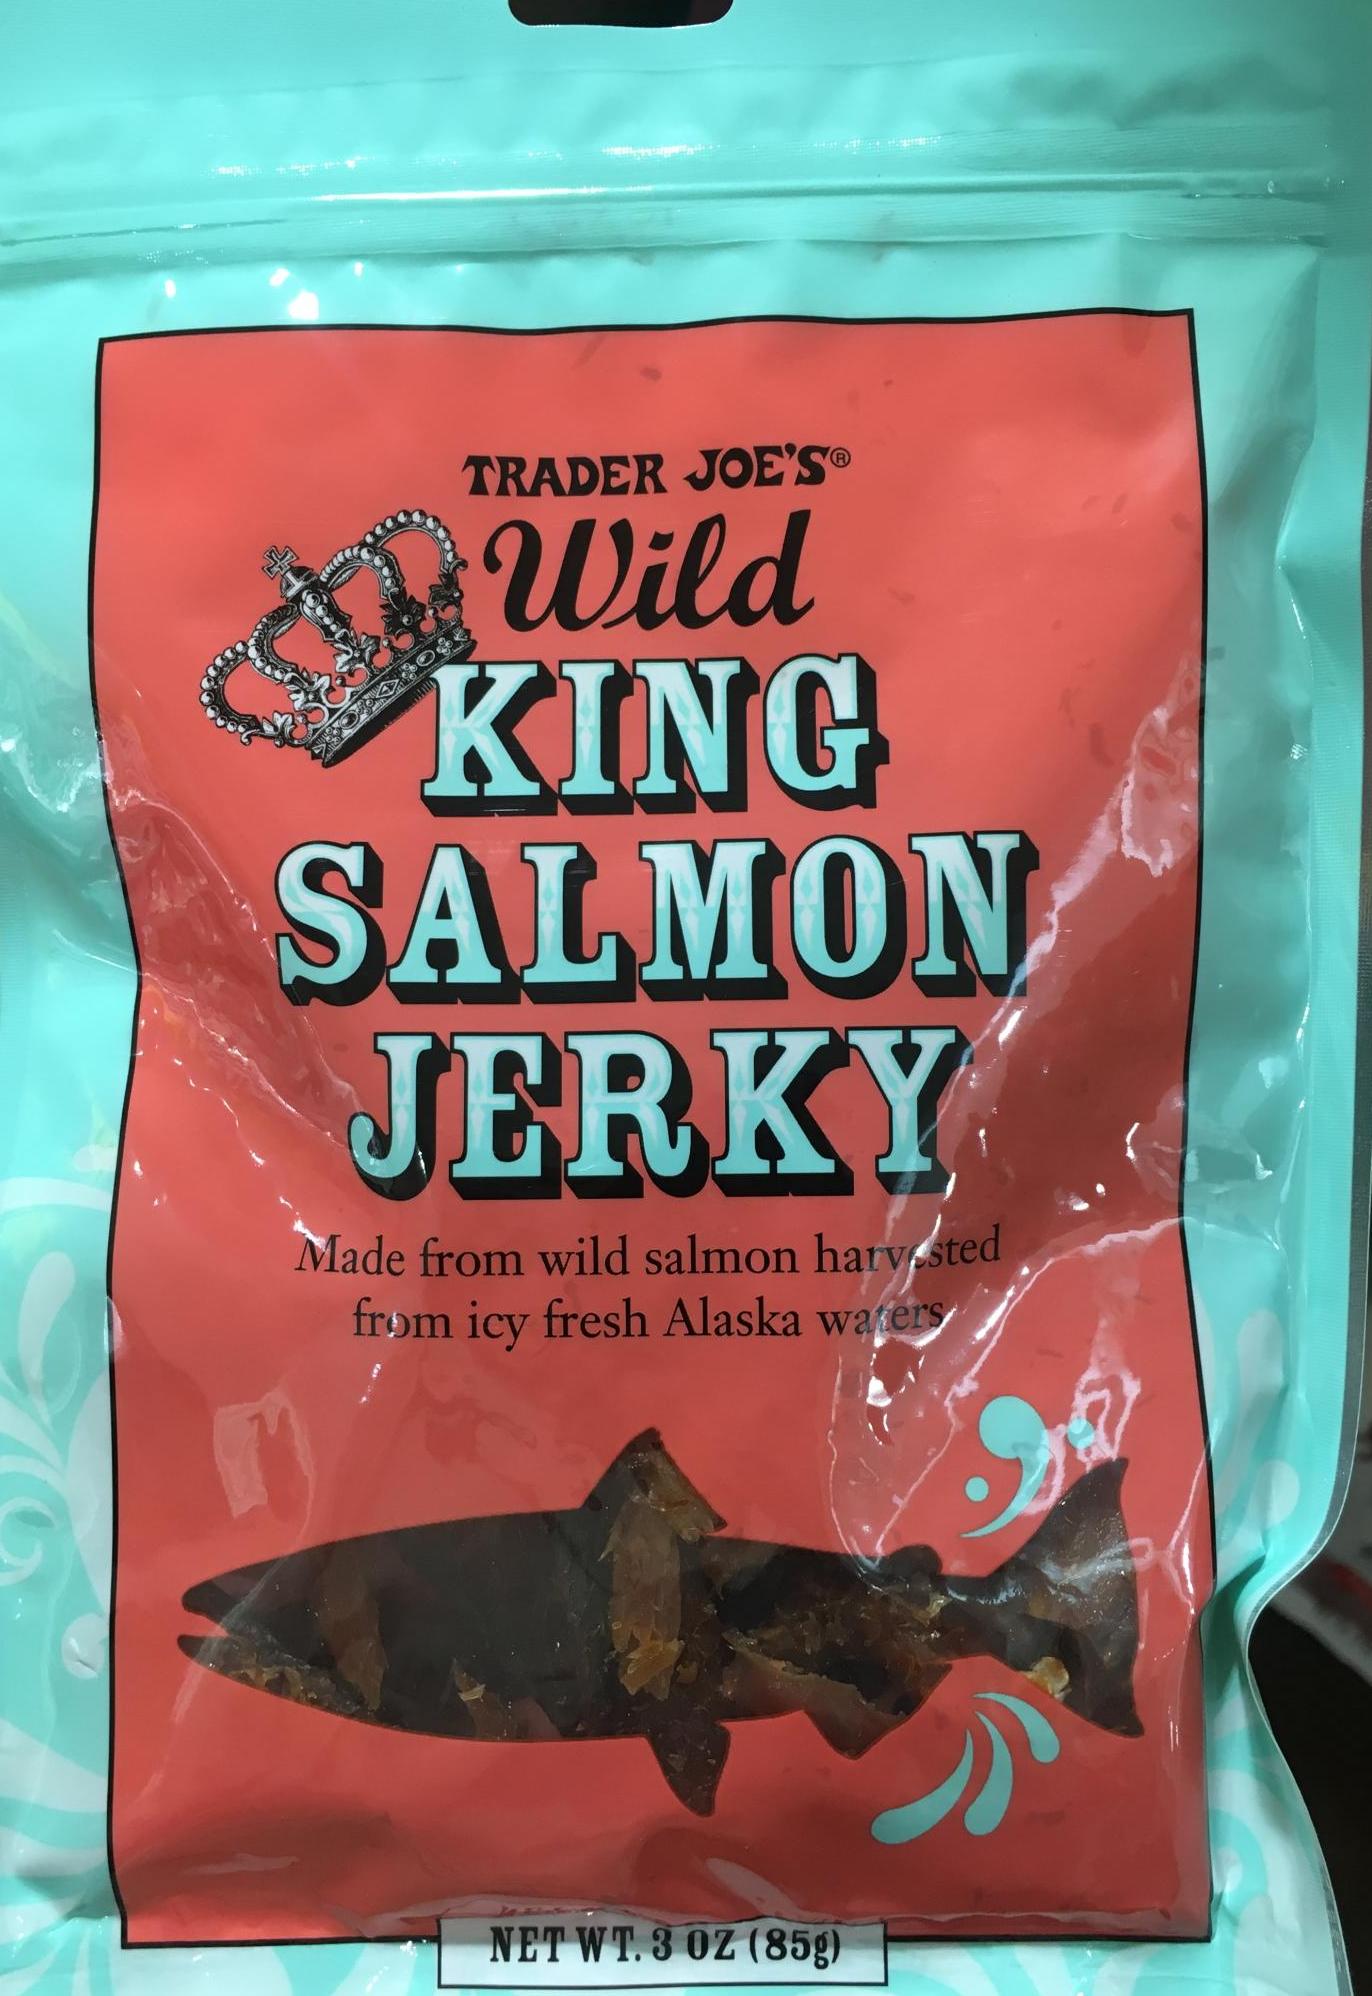 Trader Joe's protein snacks